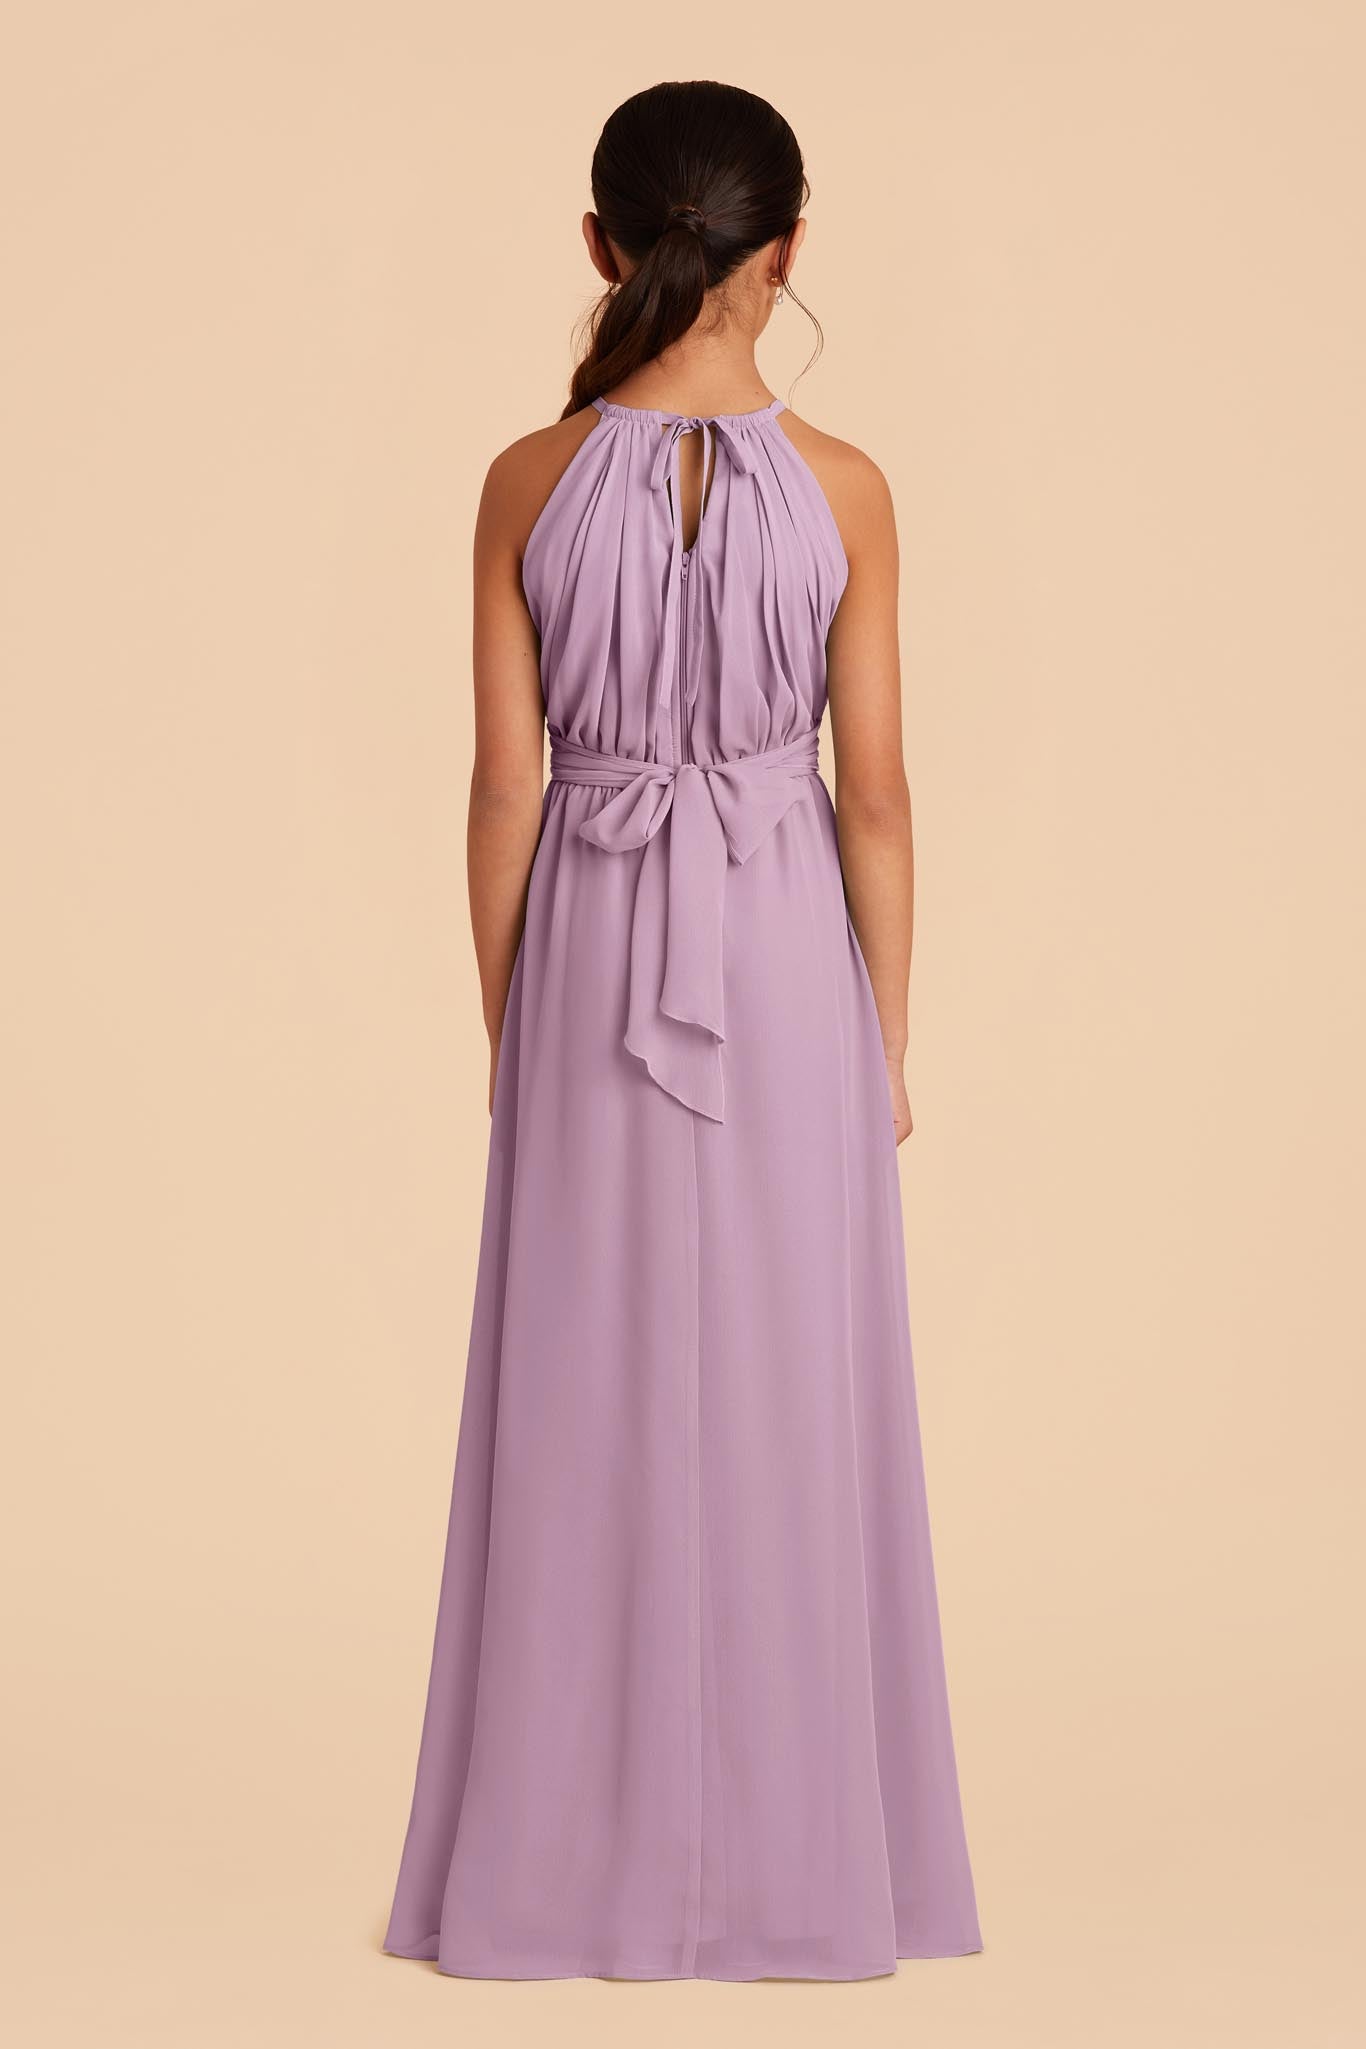 Lavender Sienna Junior Dress by Birdy Grey